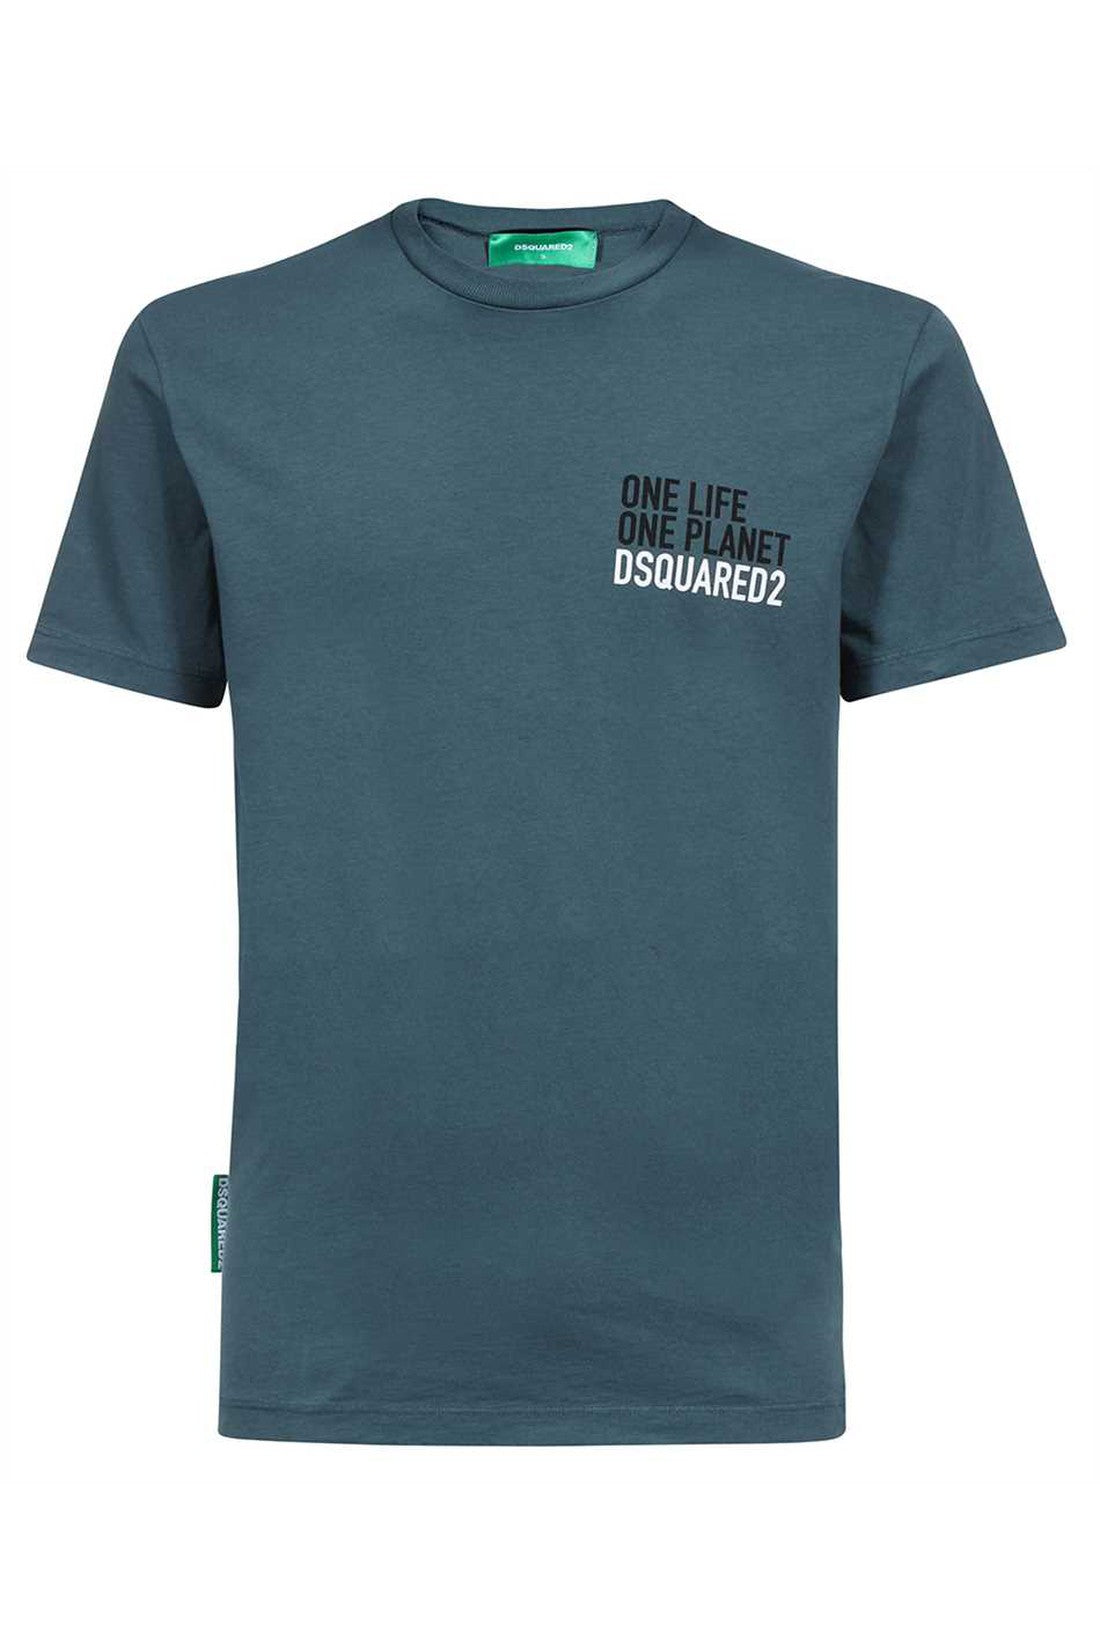 Dsquared2-OUTLET-SALE-Crew-neck-t-shirt-Shirts-3XL-ARCHIVE-COLLECTION_76ecbe9c-1033-4cf2-8a11-5e66dc63be3d.jpg